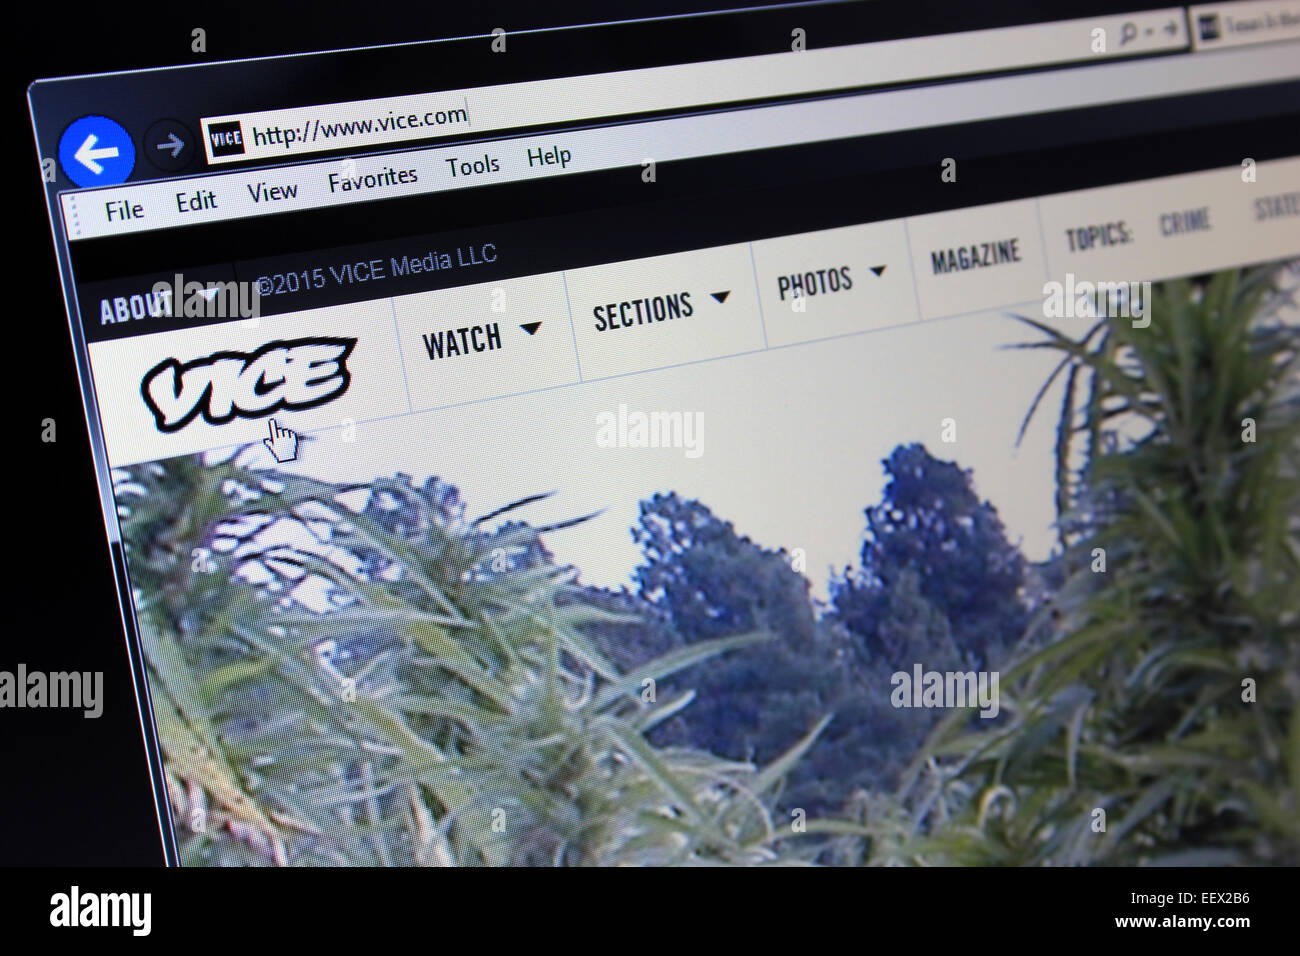 Vice.com Webseite Stockfoto